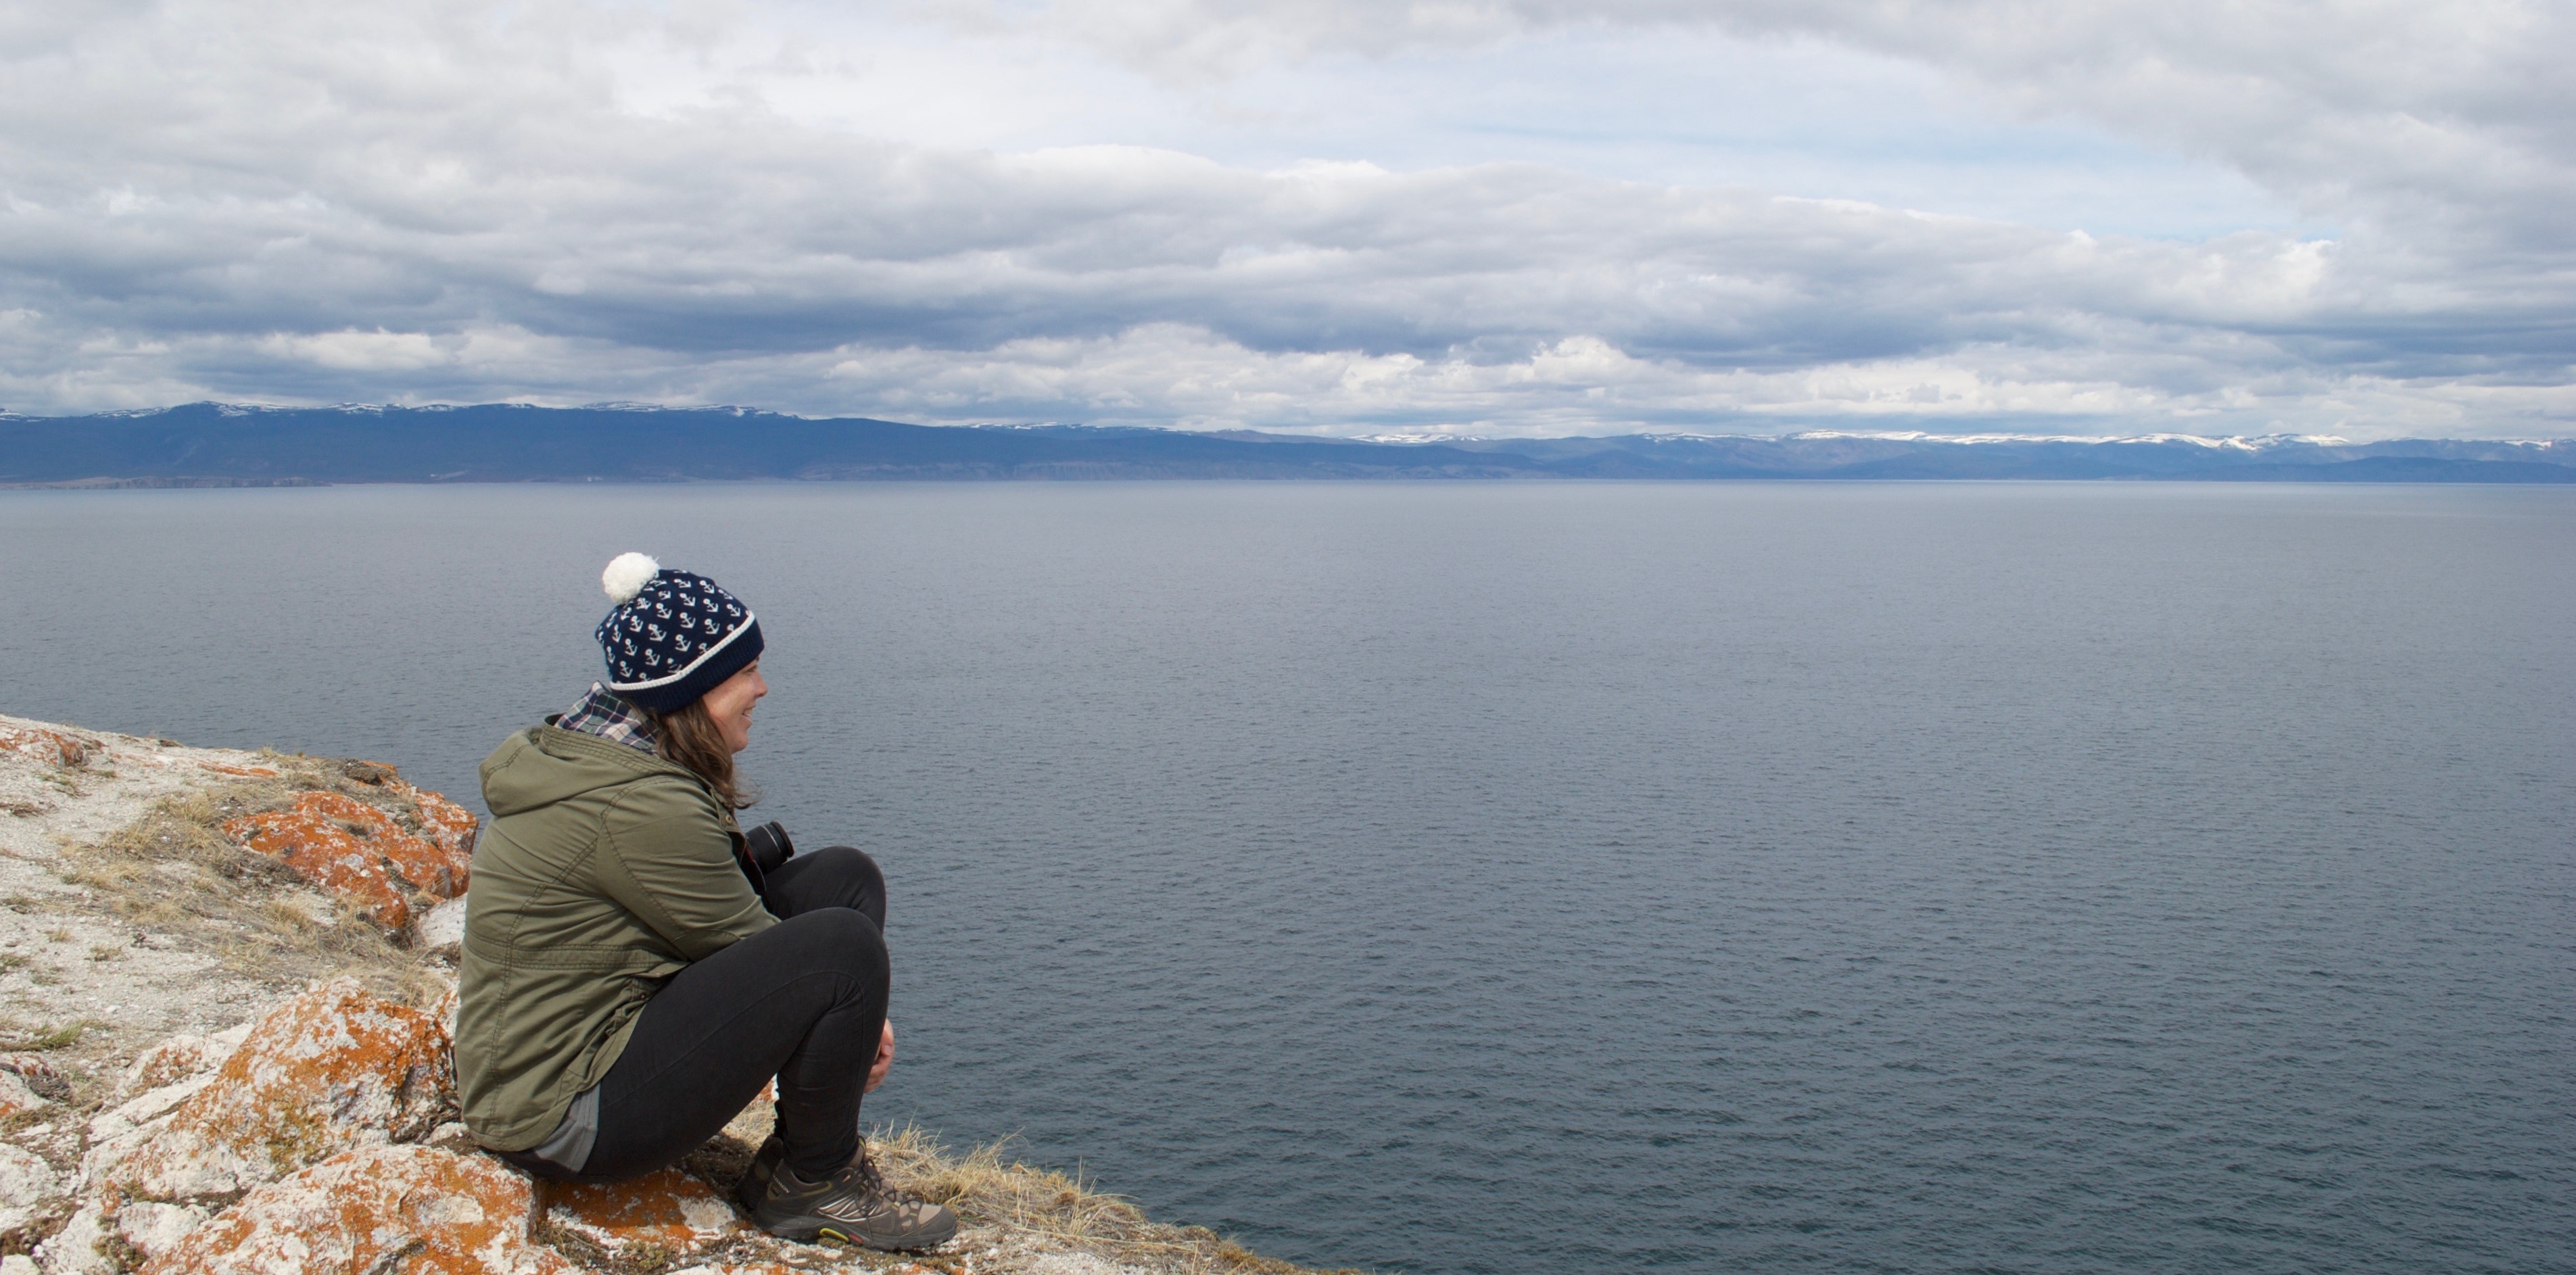 long journey home - five memorable faces. Looking out across Lake Baikal.